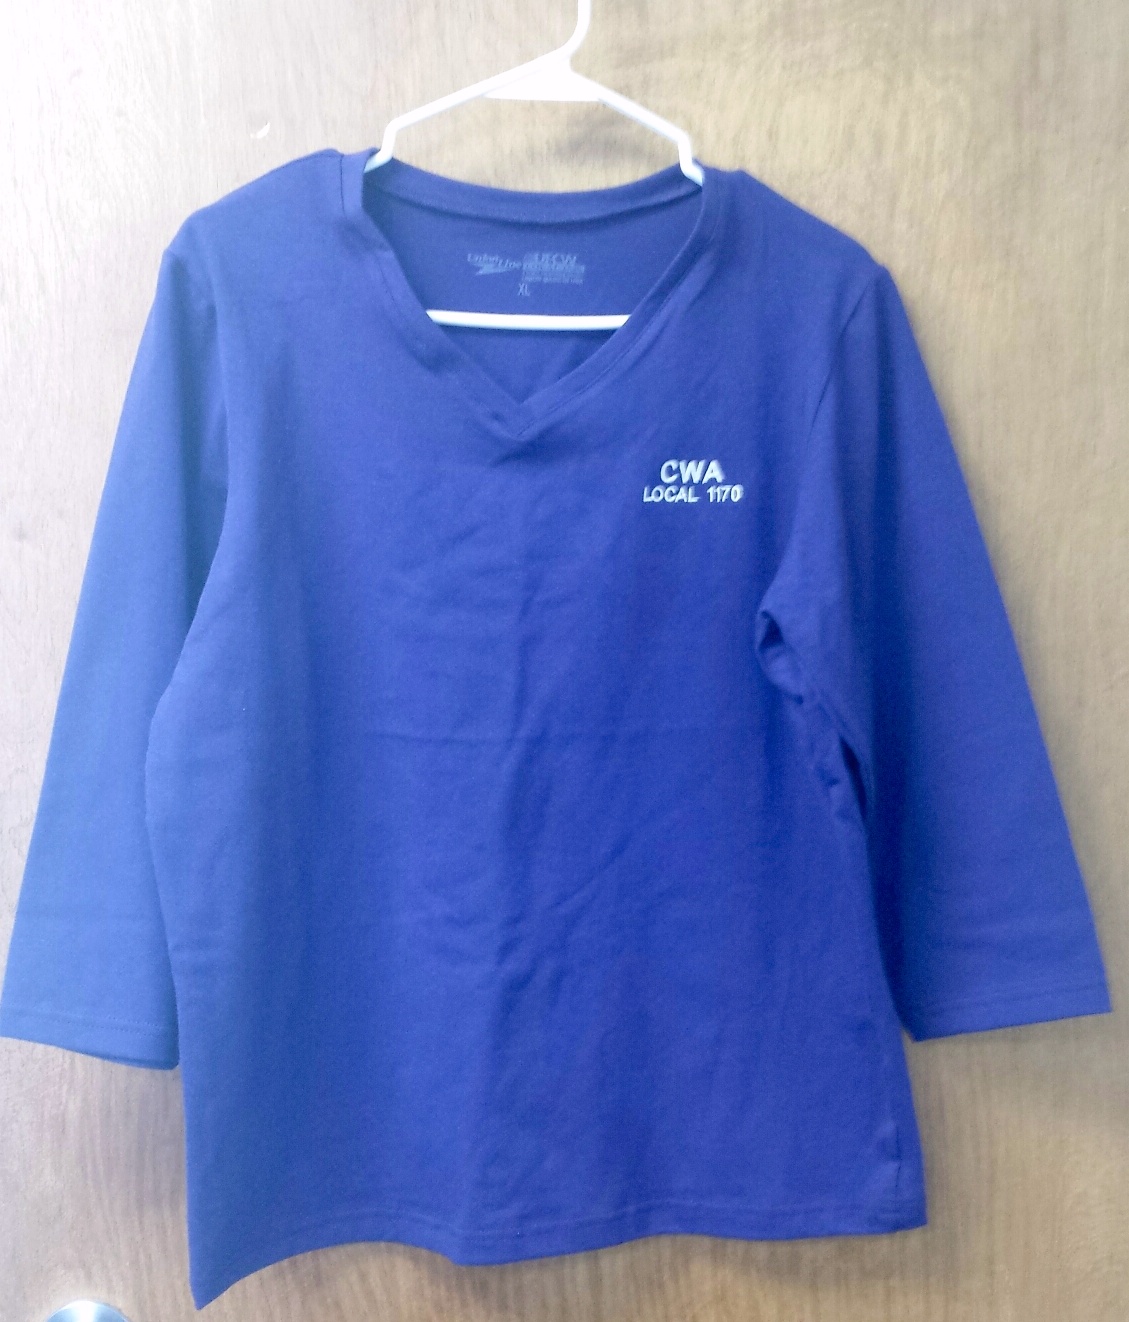 Ladies Purple 3/4 Sleeve Shirt - CWA Local 1170